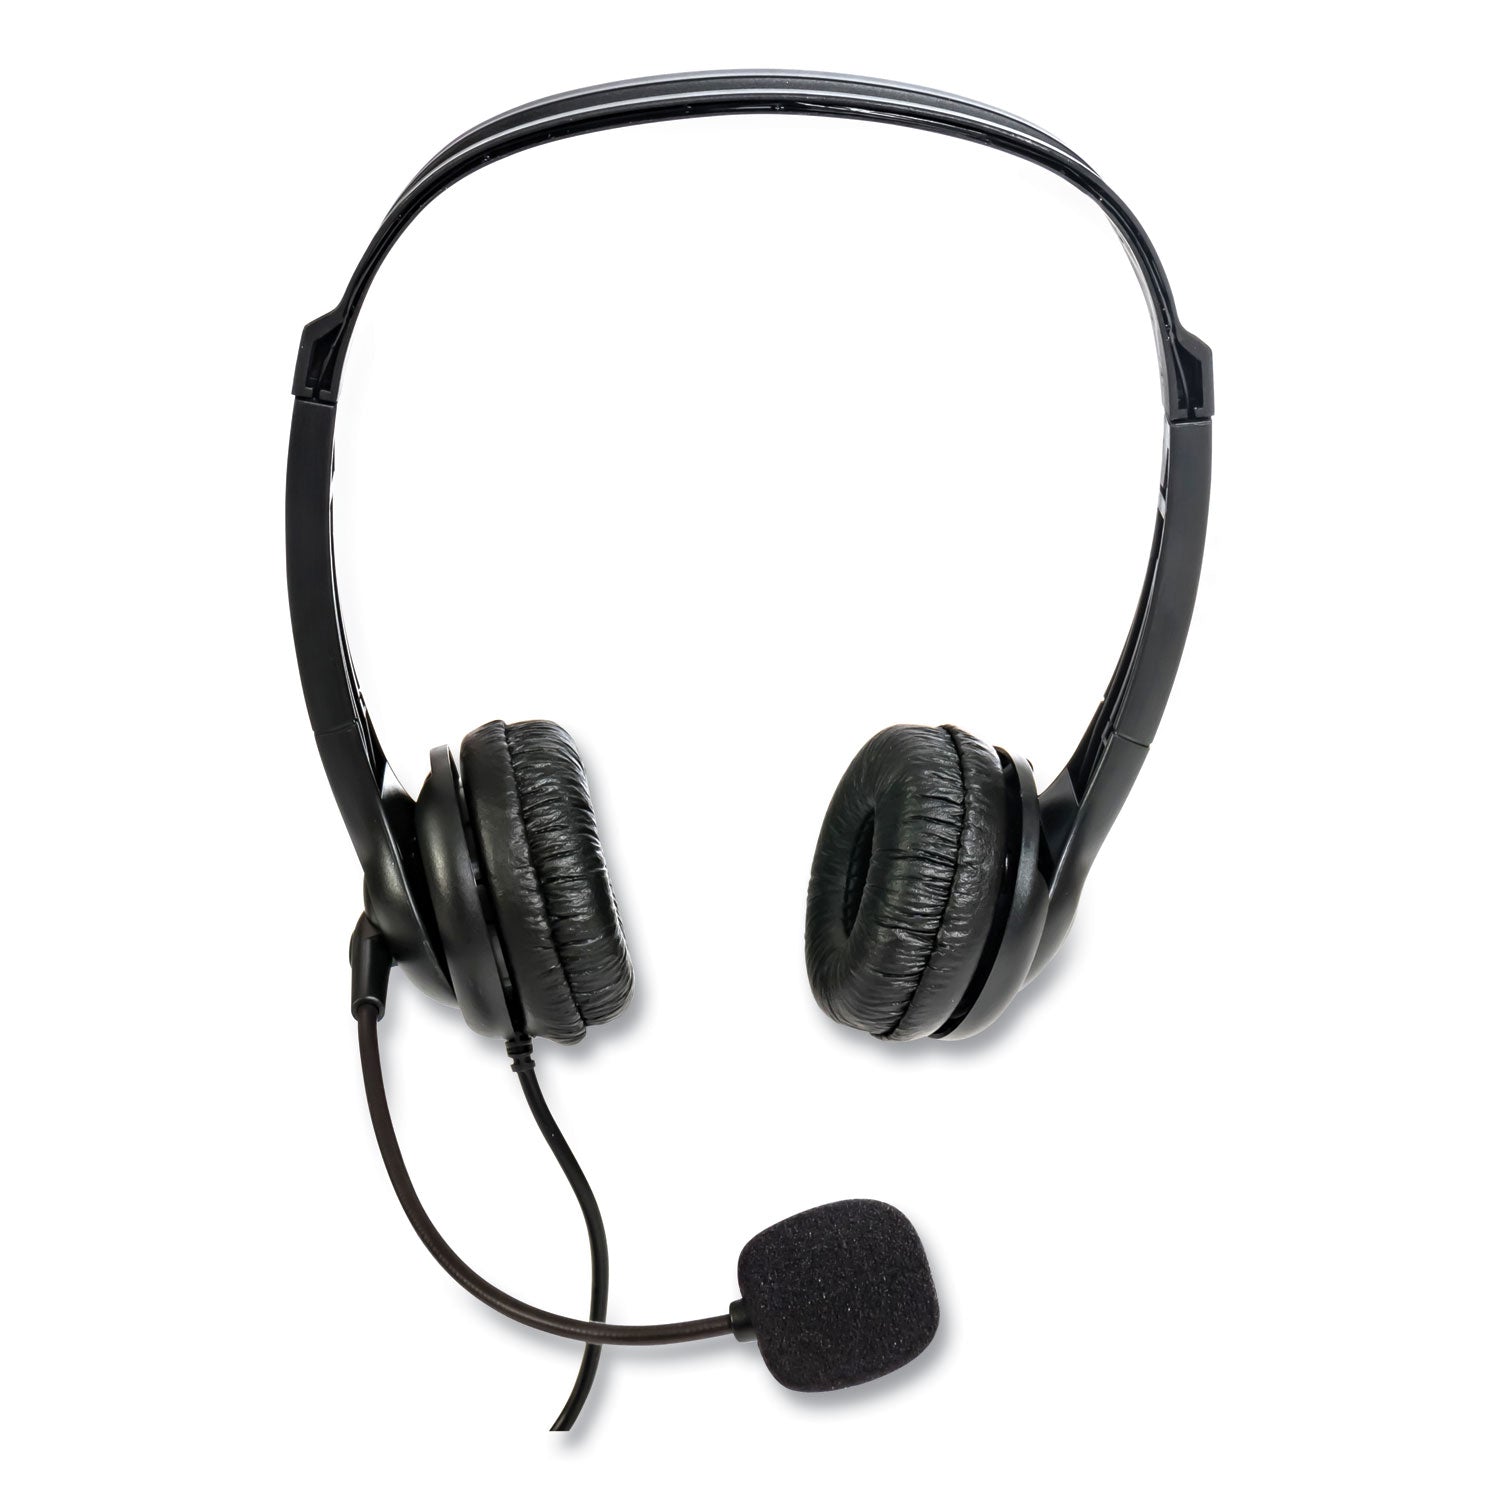 zum3500-binaural-over-the-head-usb-headset-black_sptzum3500 - 4